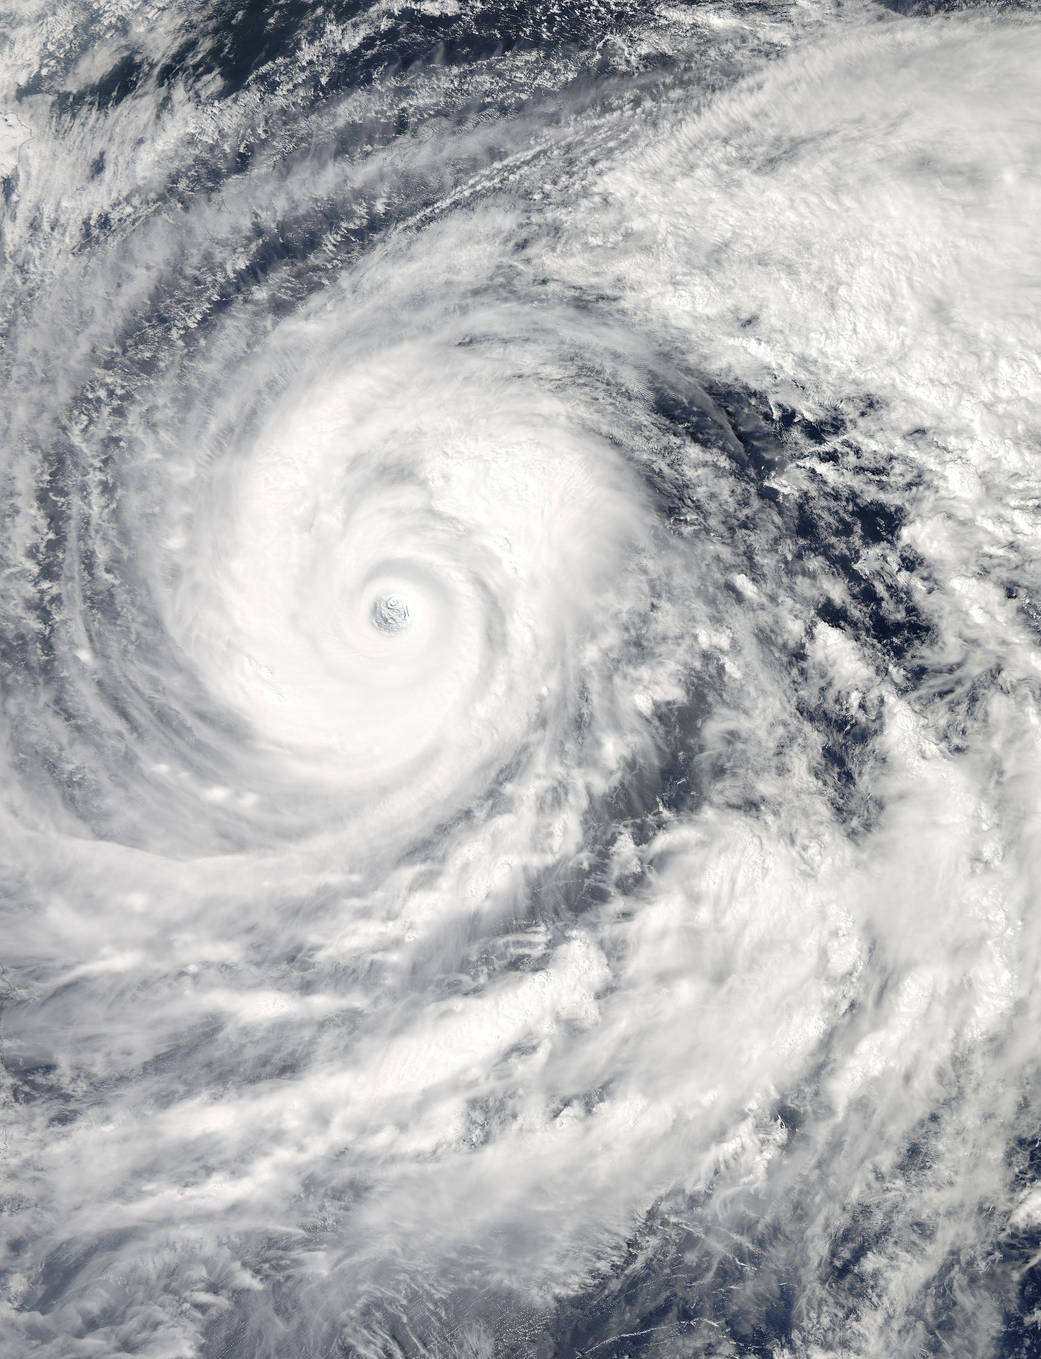 Image of Super Typhoon Vongfong taken by NASA's Aqua satellite